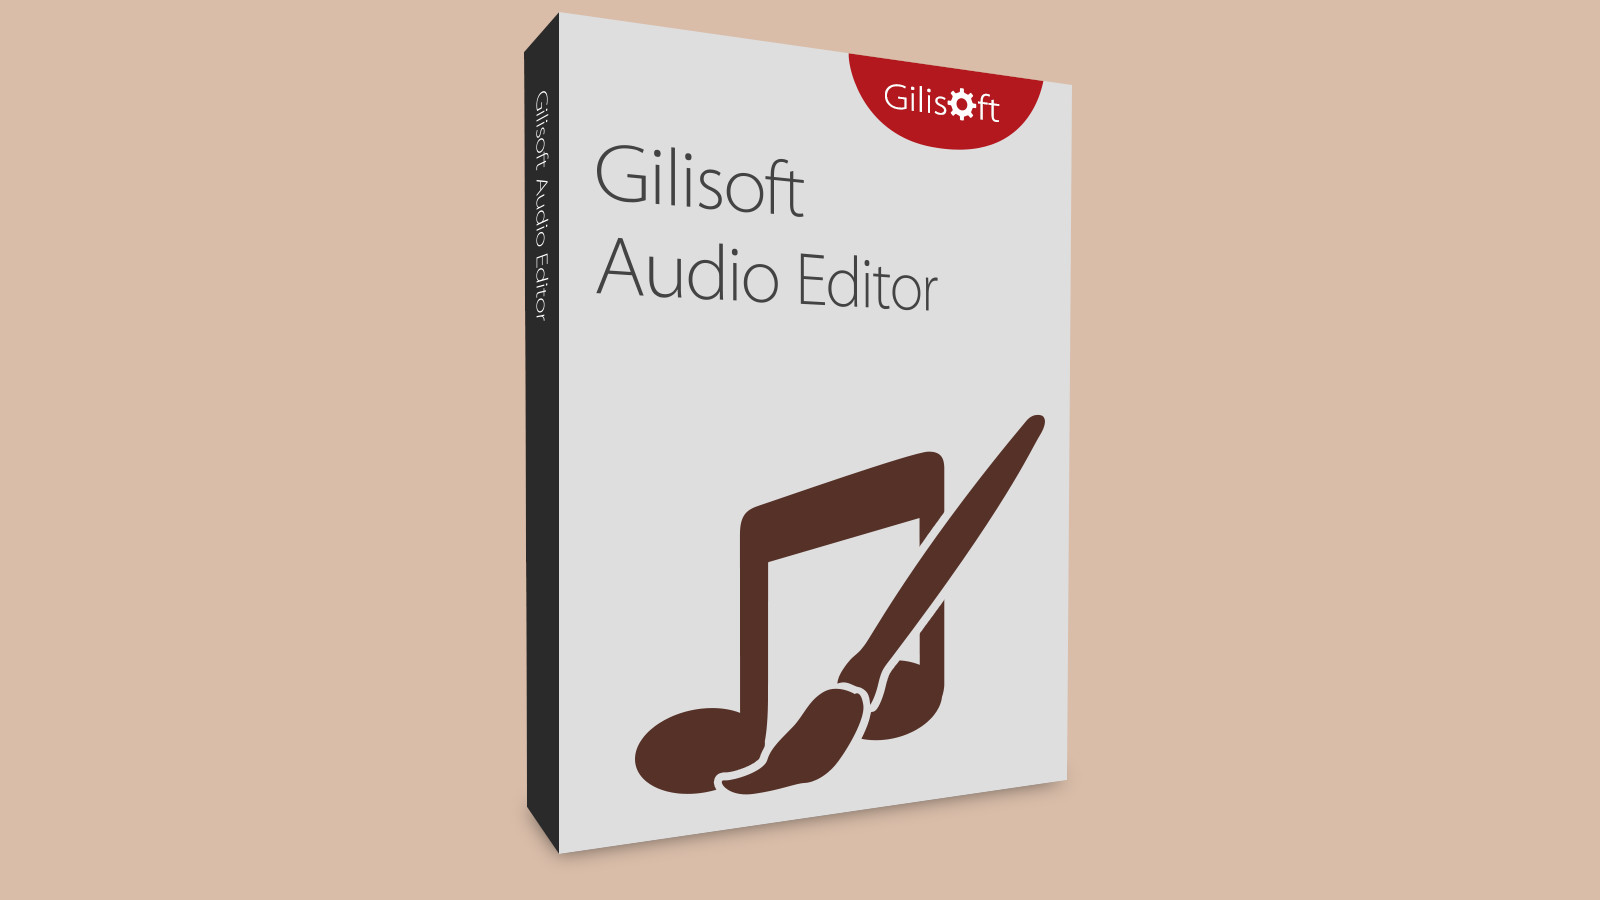 Gilisoft Audio Editor CD Key, 16.5$